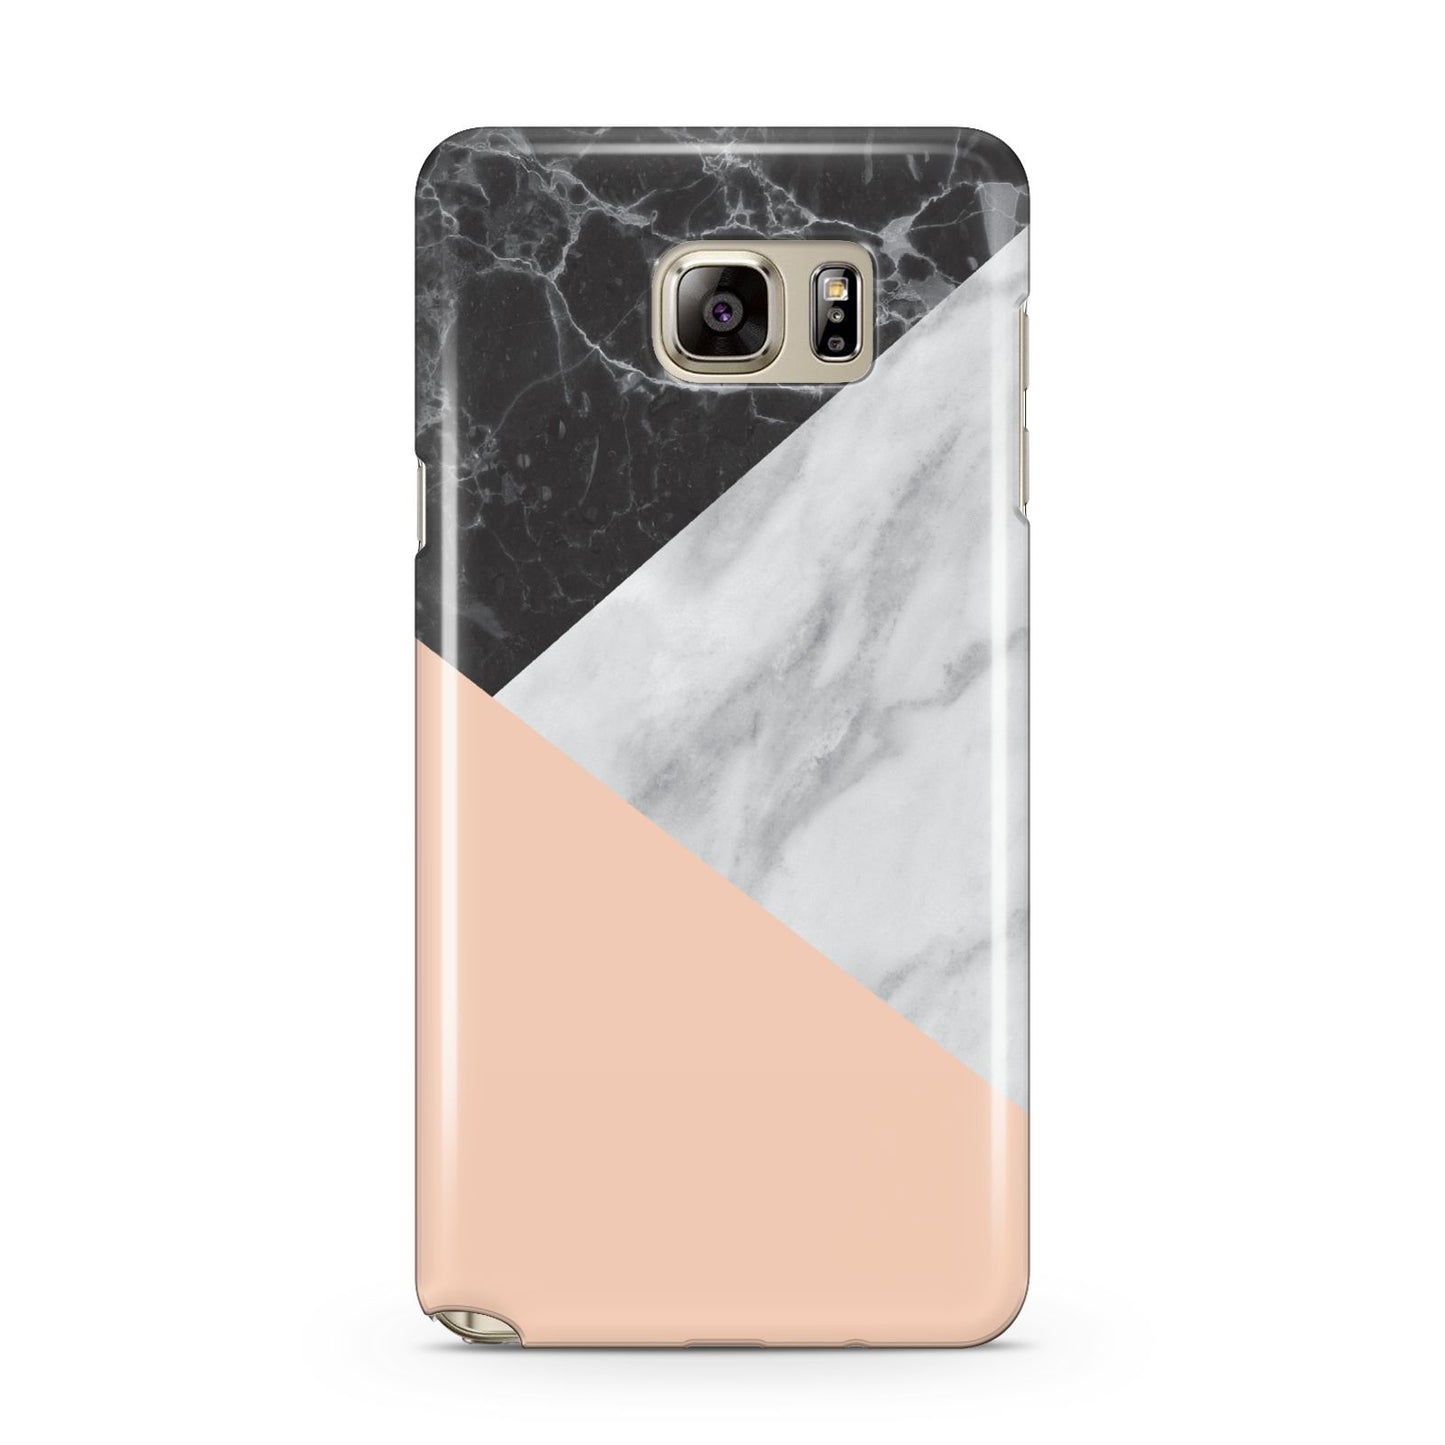 Marble Black White Grey Peach Samsung Galaxy Note 5 Case